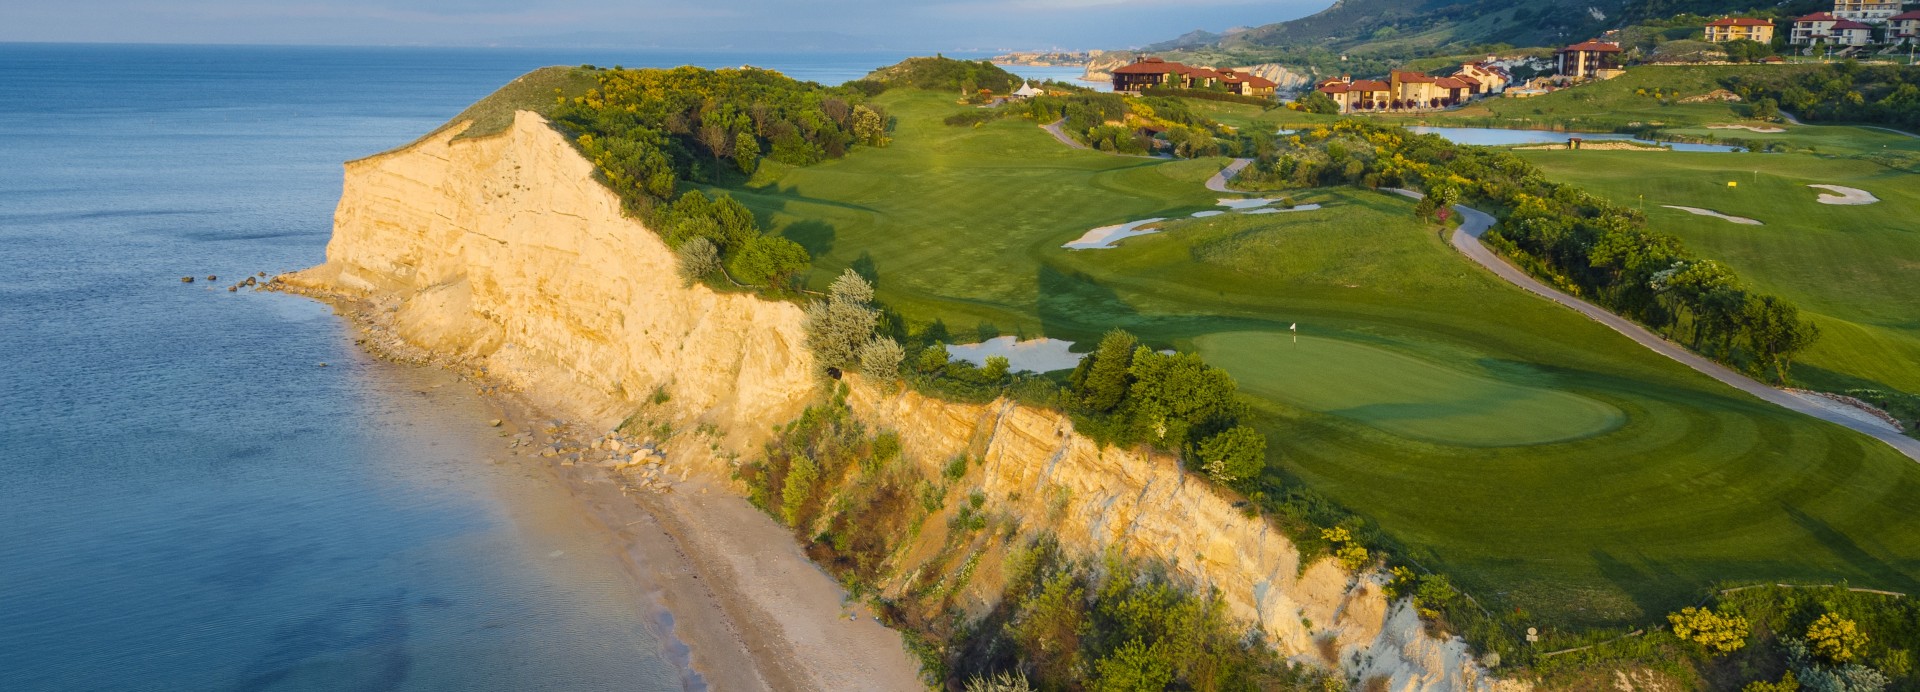 thracian cliffs golf & spa resort ****